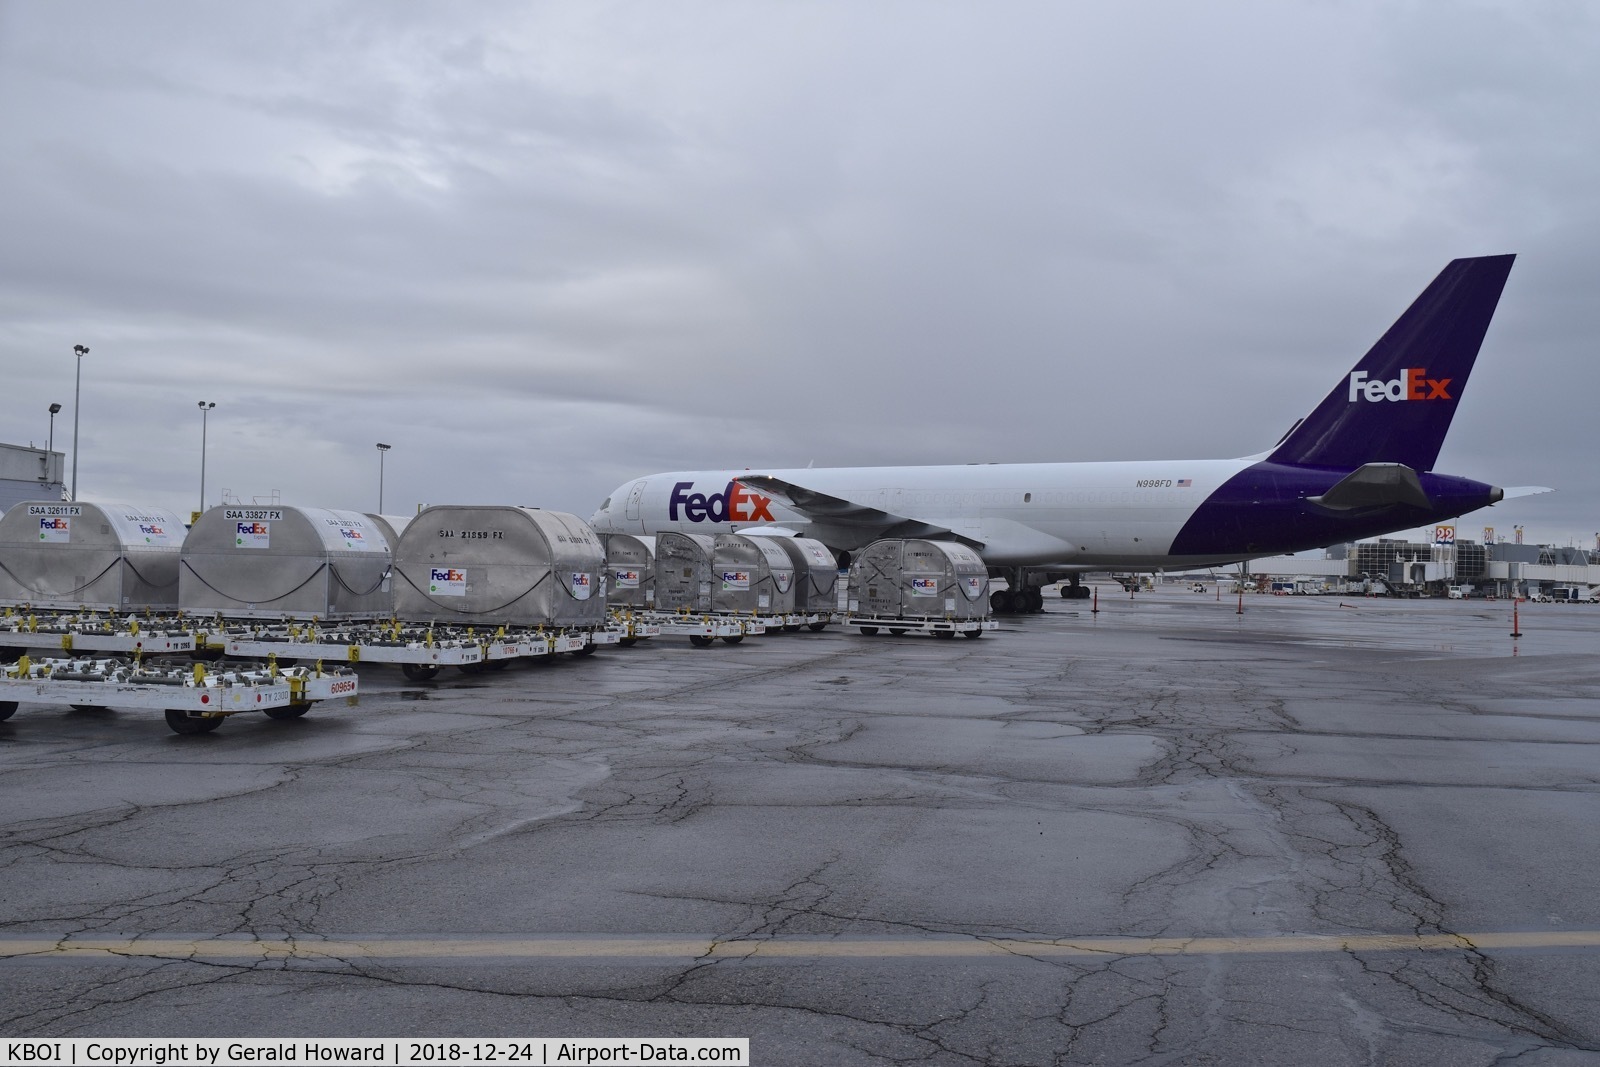 Boise Air Terminal/gowen Fld Airport (BOI) - Fed Ex still running cargo on Christmas Eve.